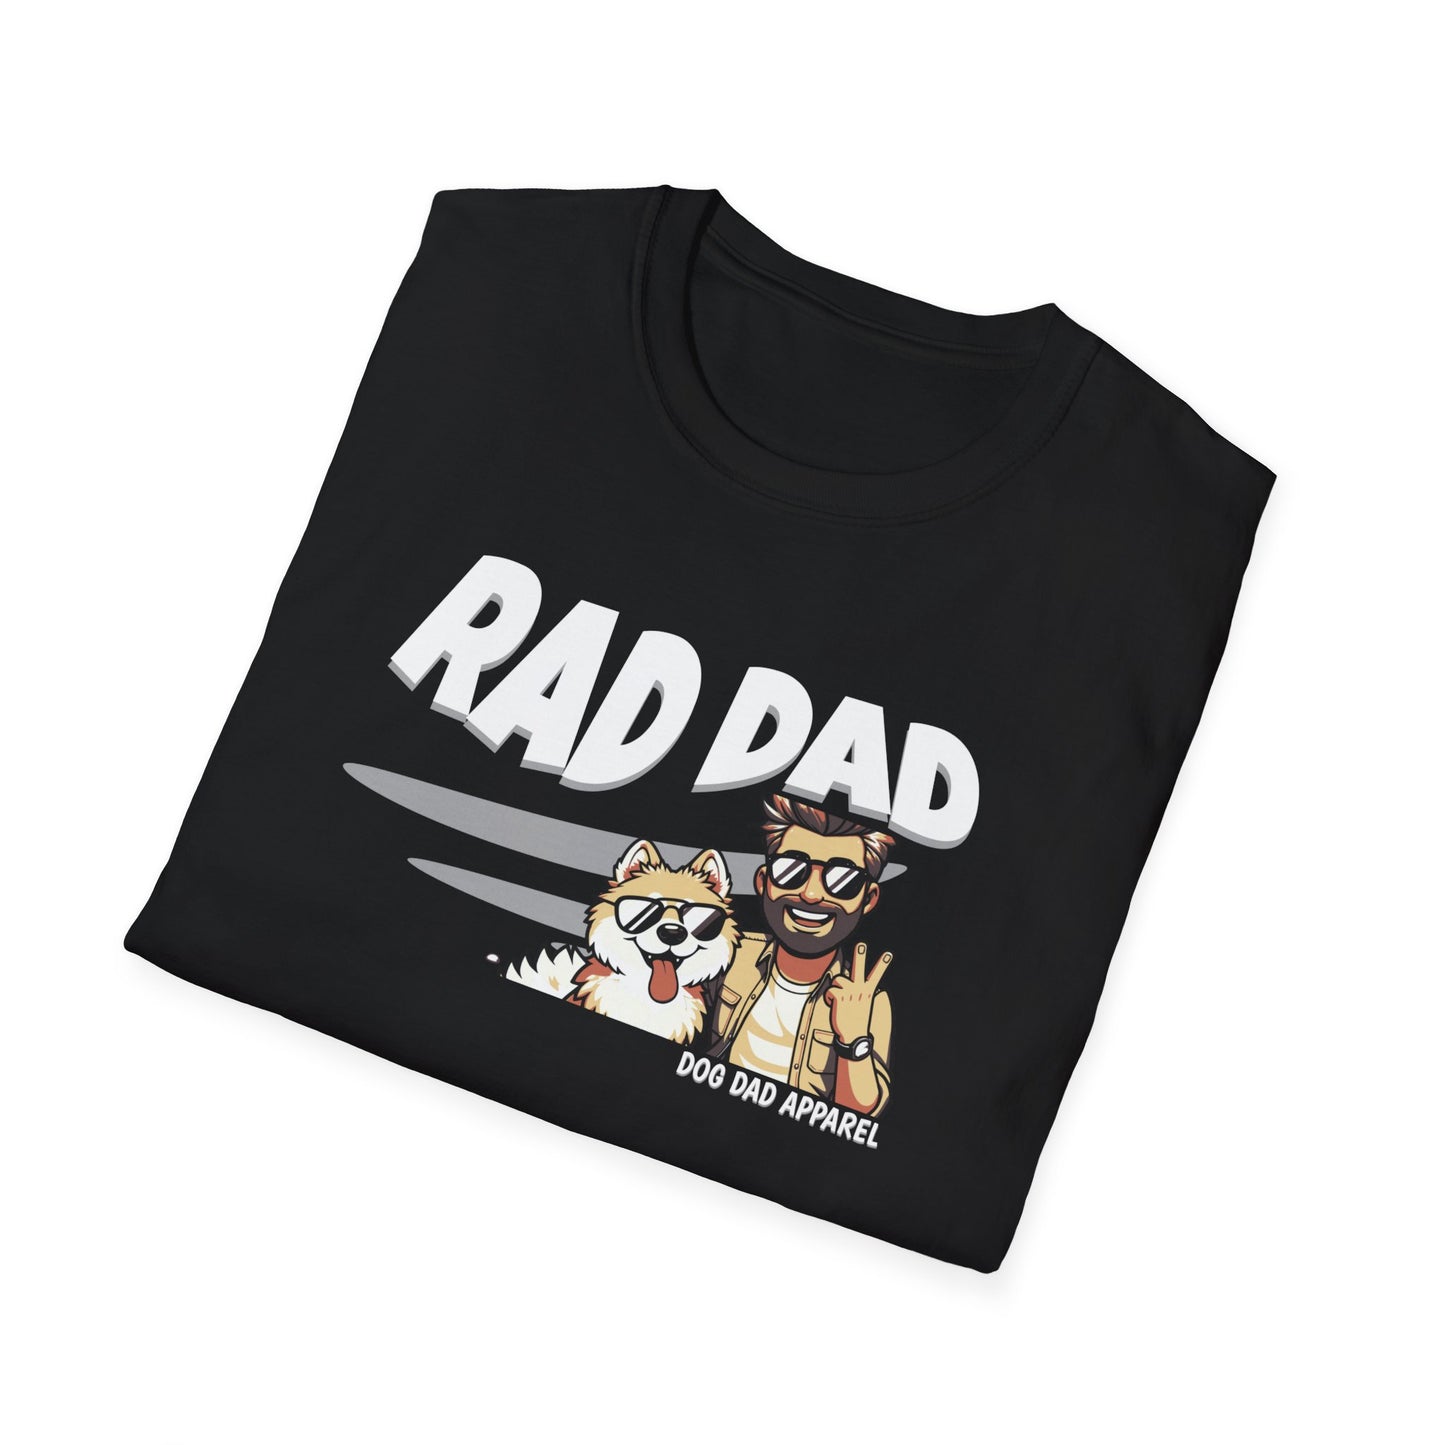 Rad Dad - Graphic Tee